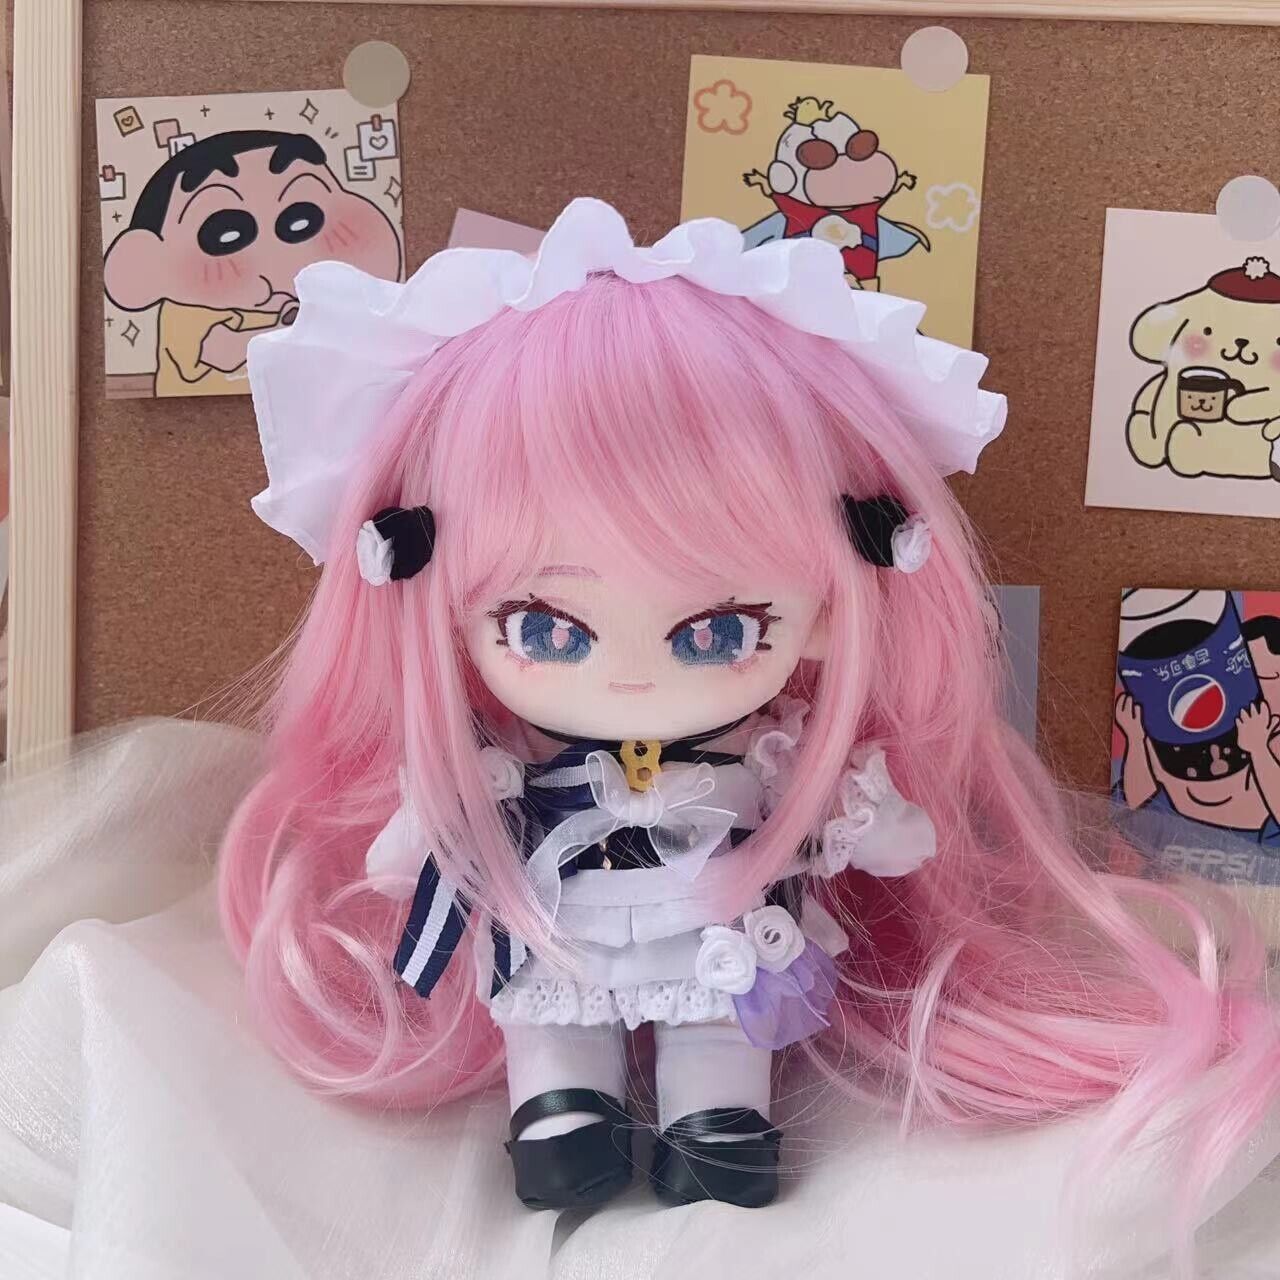 Honkai Impact 3 Elysia Herrscher of Human: Ego Plush Doll Dress Up Plushie Toy